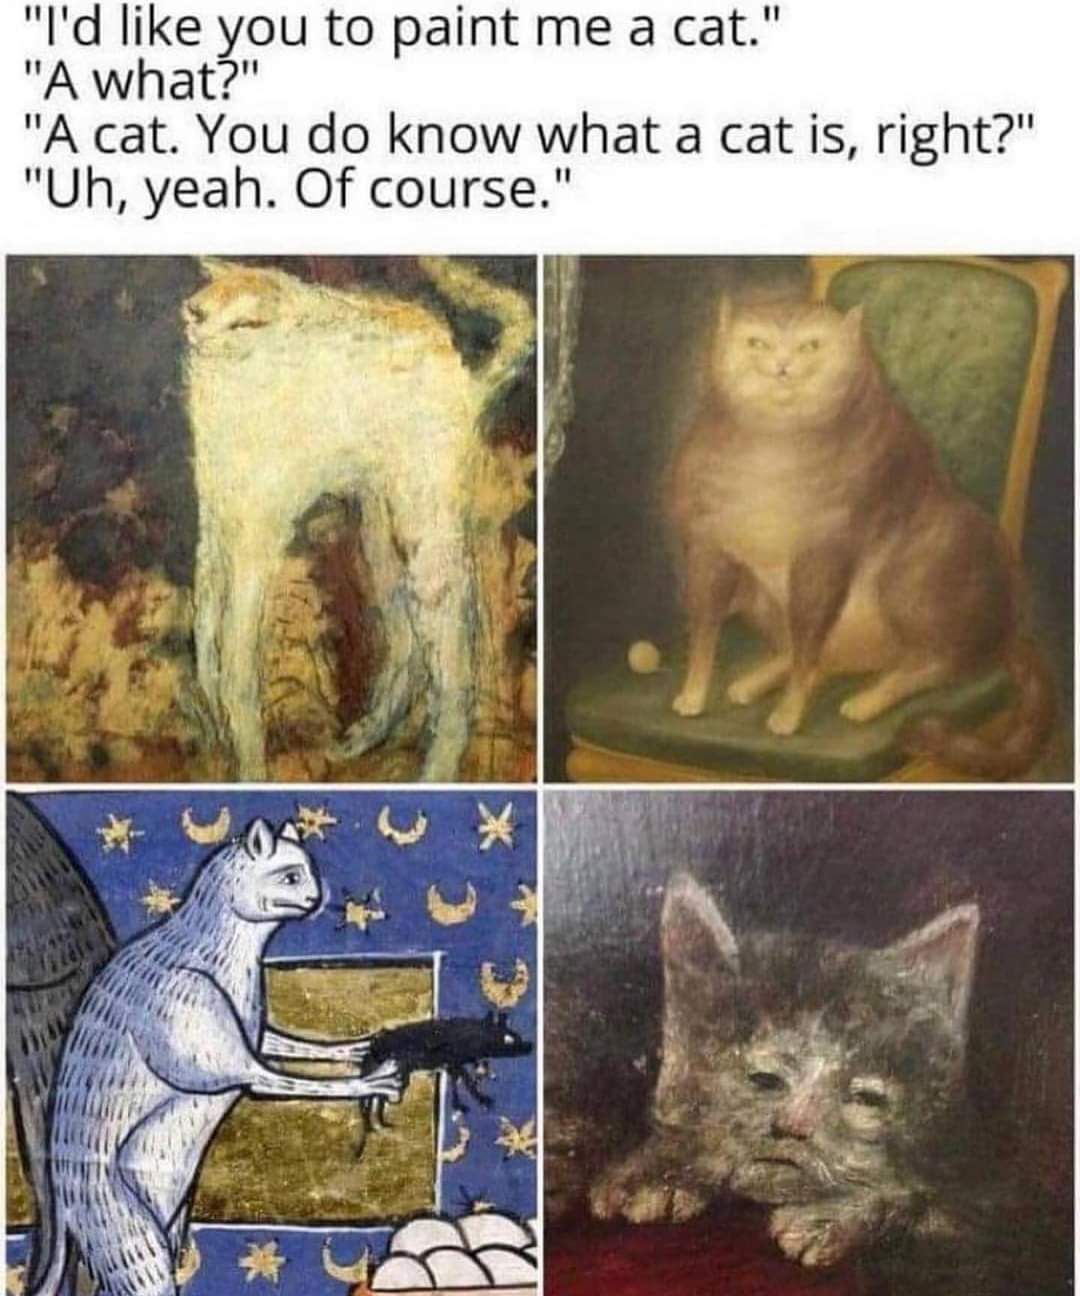 The bottom right cat is my spirit animal.